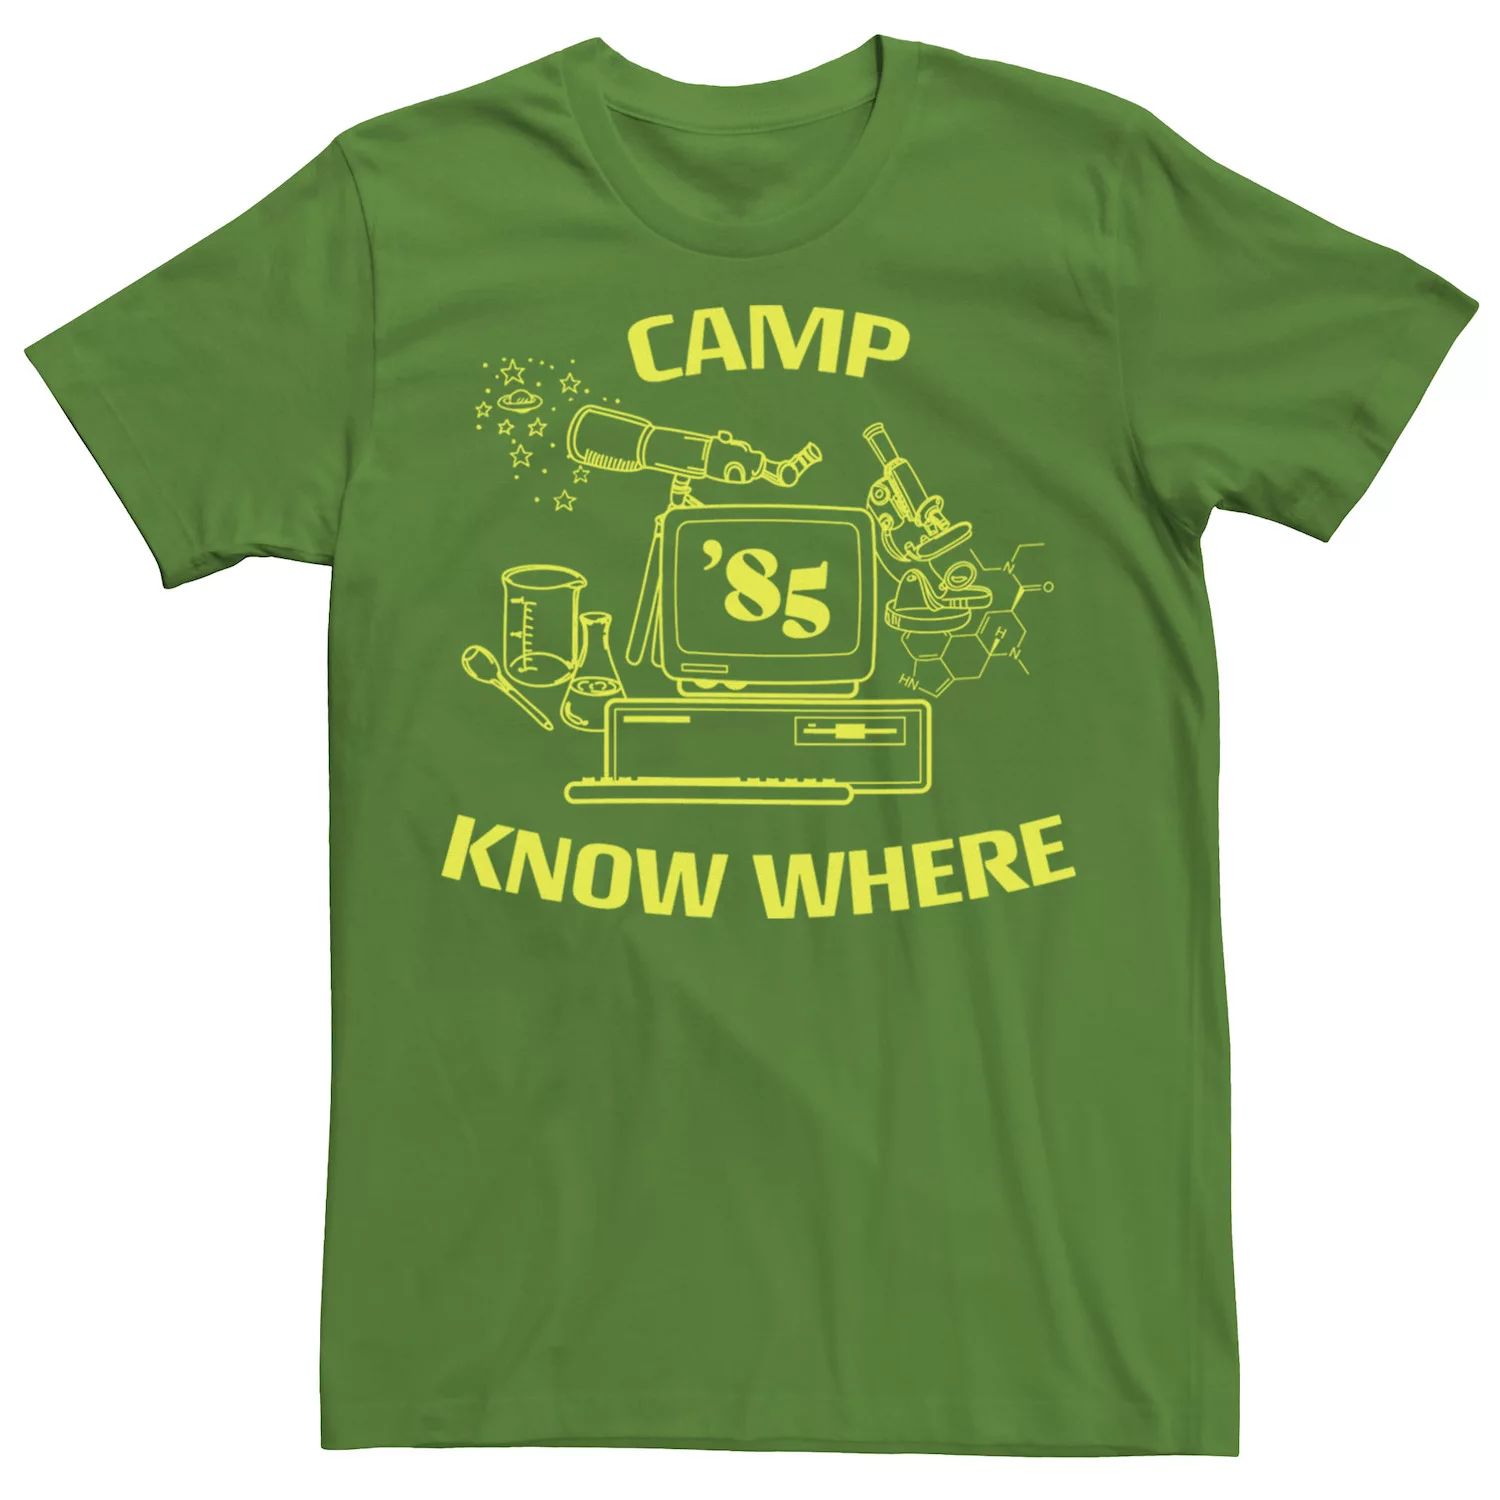 Мужская футболка с логотипом Netflix Stranger Things Camp Know Where 85 Licensed Character 2019 stranger things 3 dustin hat new retro mesh trucker cap camp know where